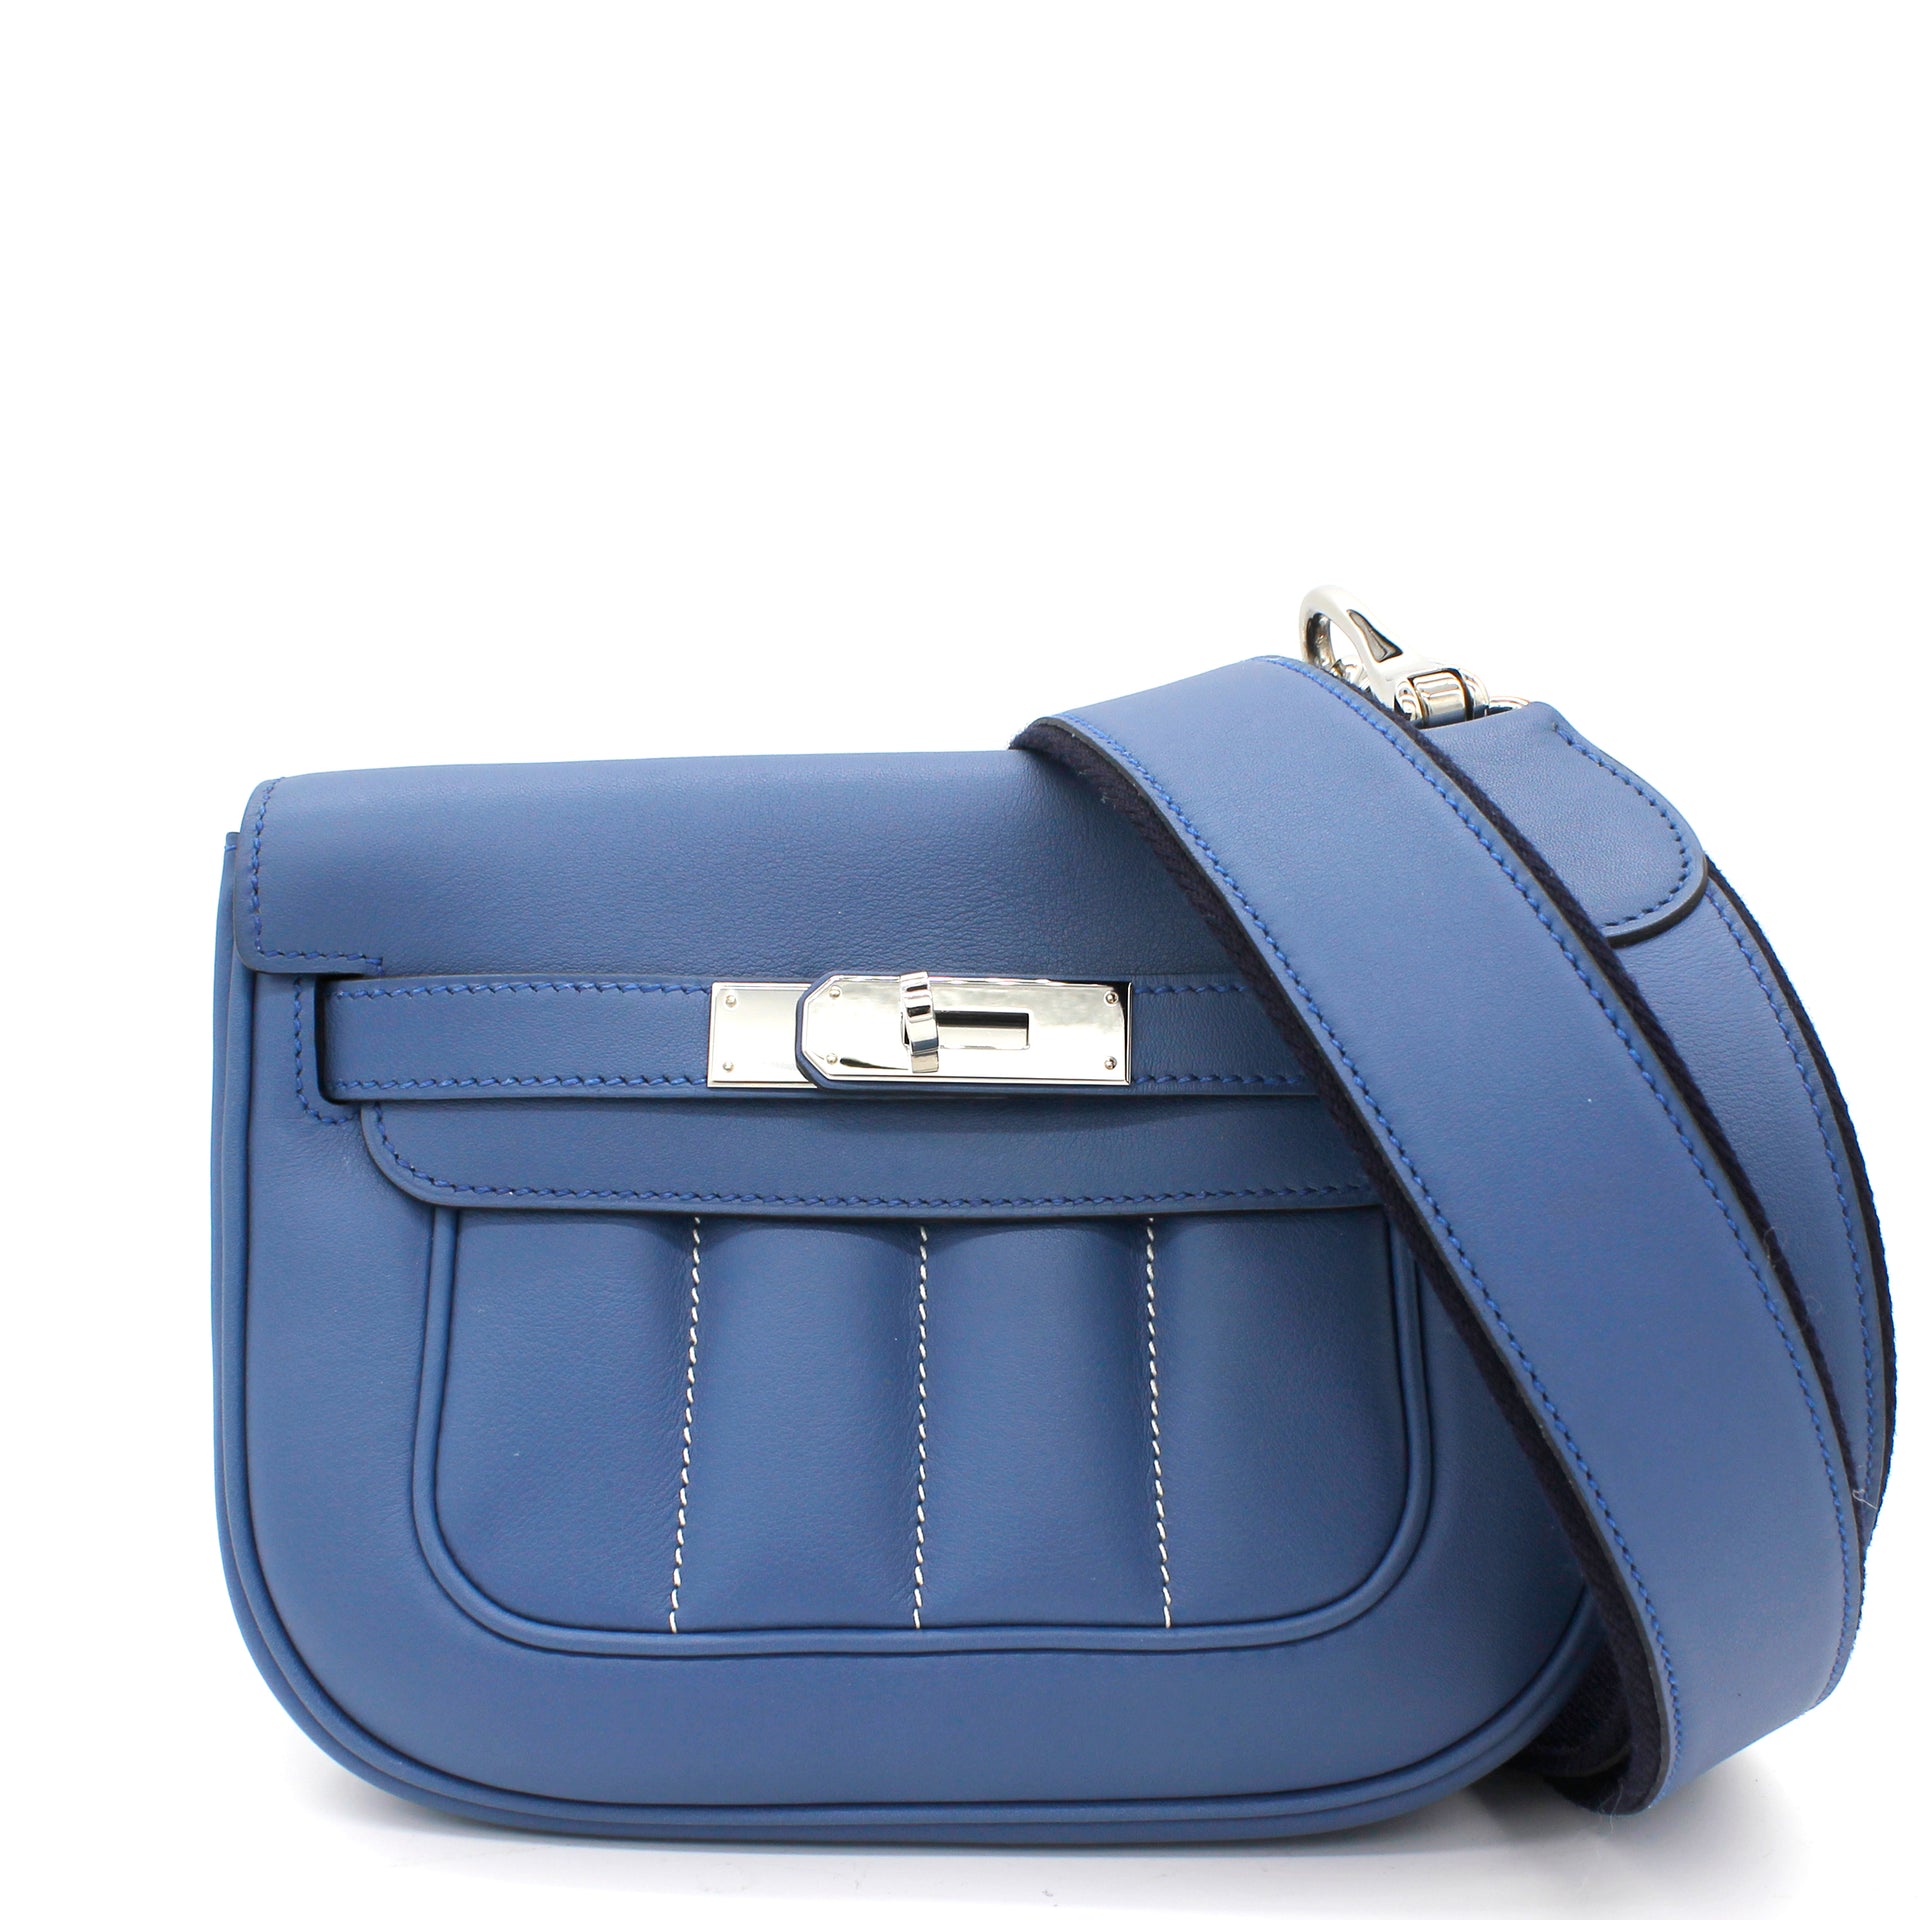 Hermes mini berline bag blue